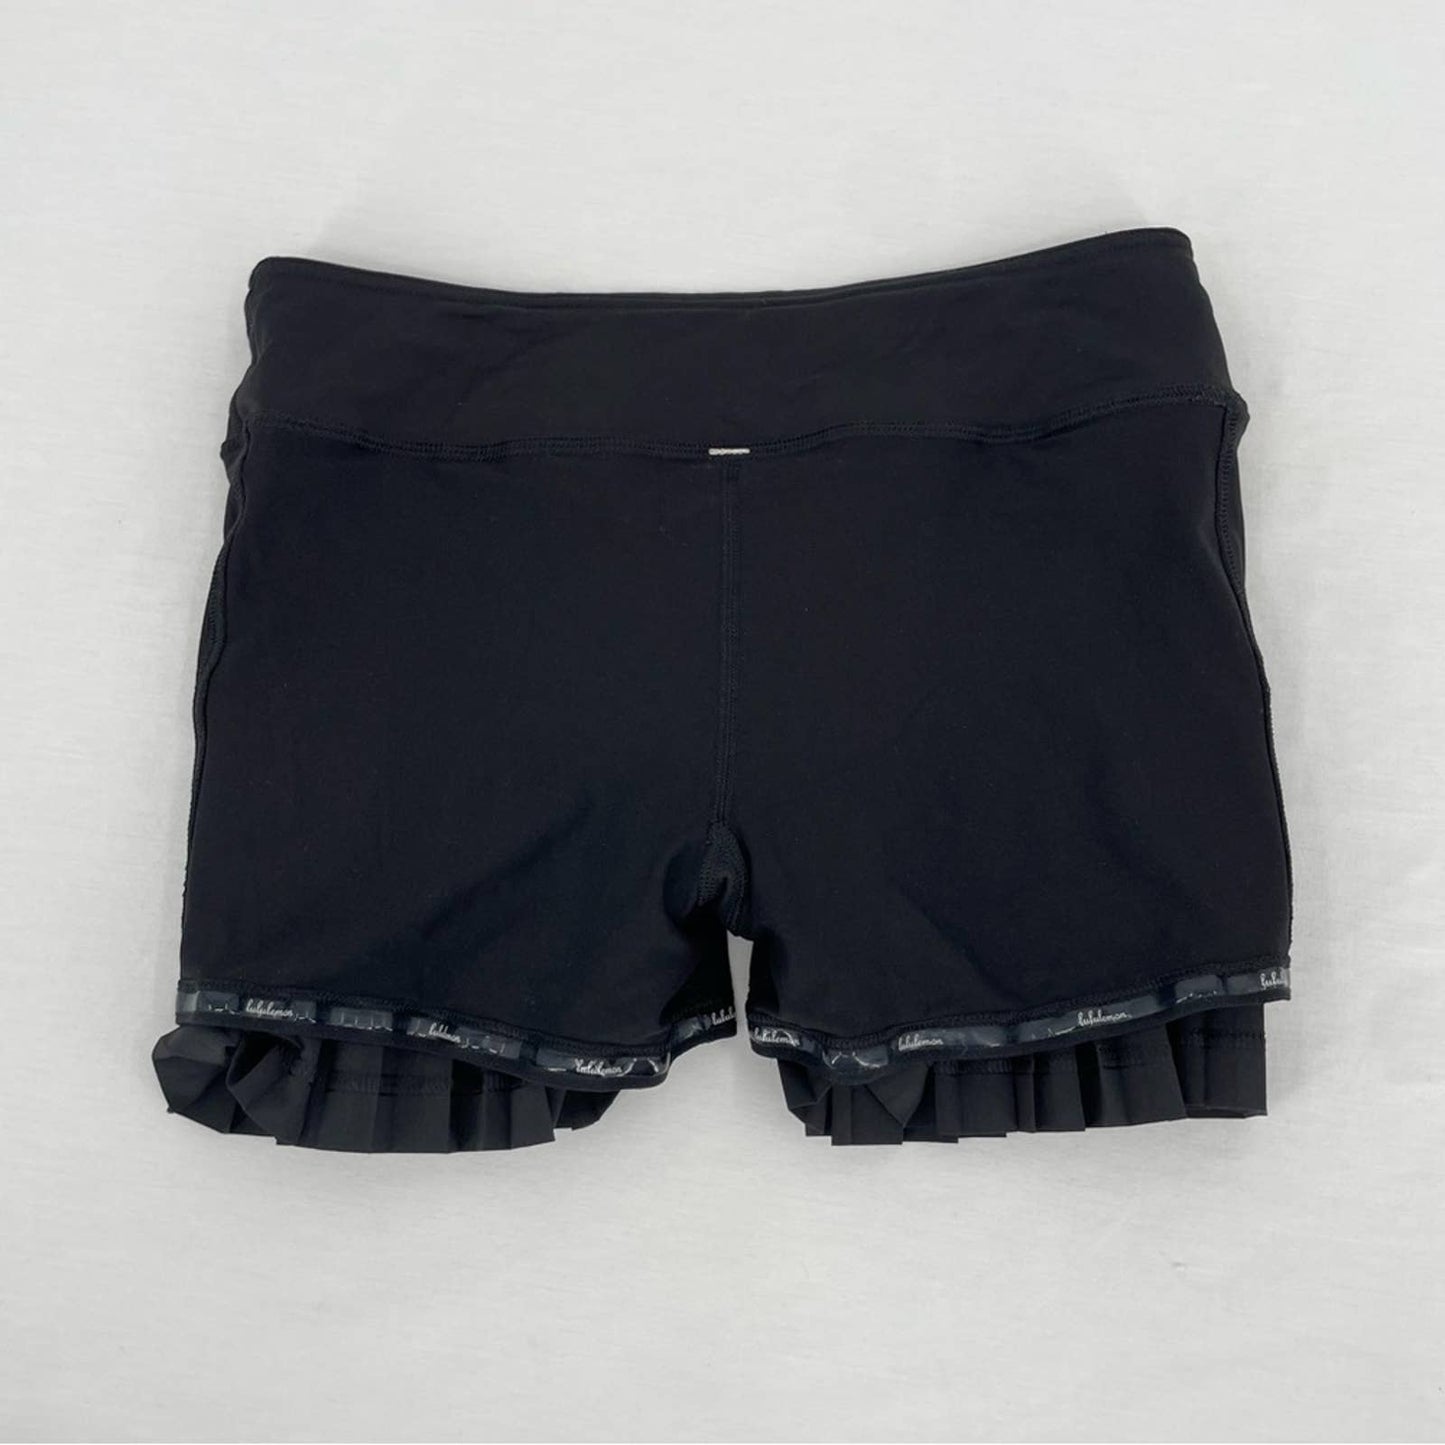 Lululemon Pleat to Street II Black Skirt Skort Golf Tennis Ballerina Twirly Size 6